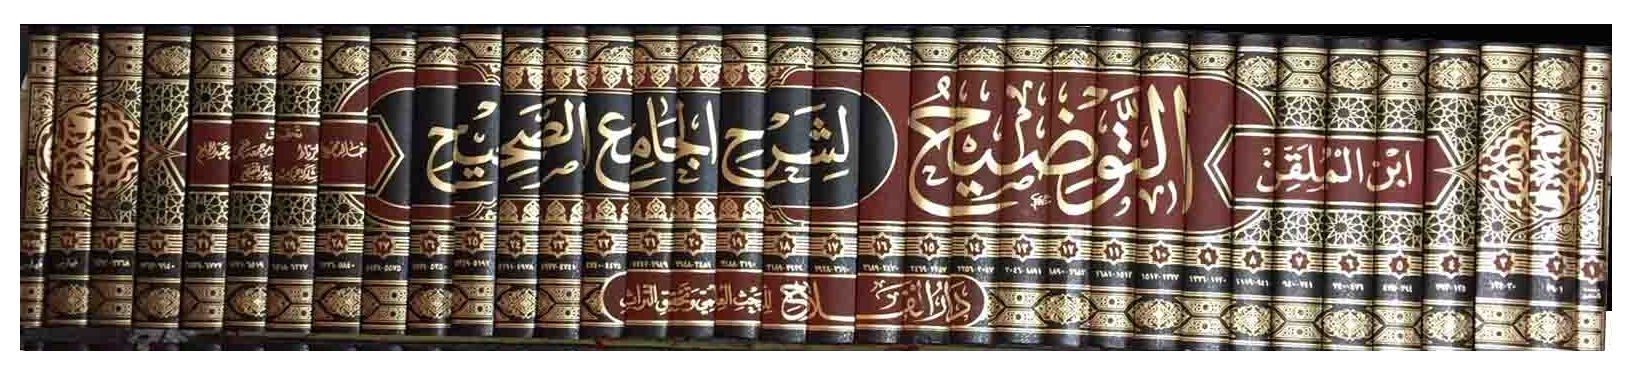 Modal Additional Images for Al-Tawdih sharh Jami Sahih al-Bukhari 35 Vols